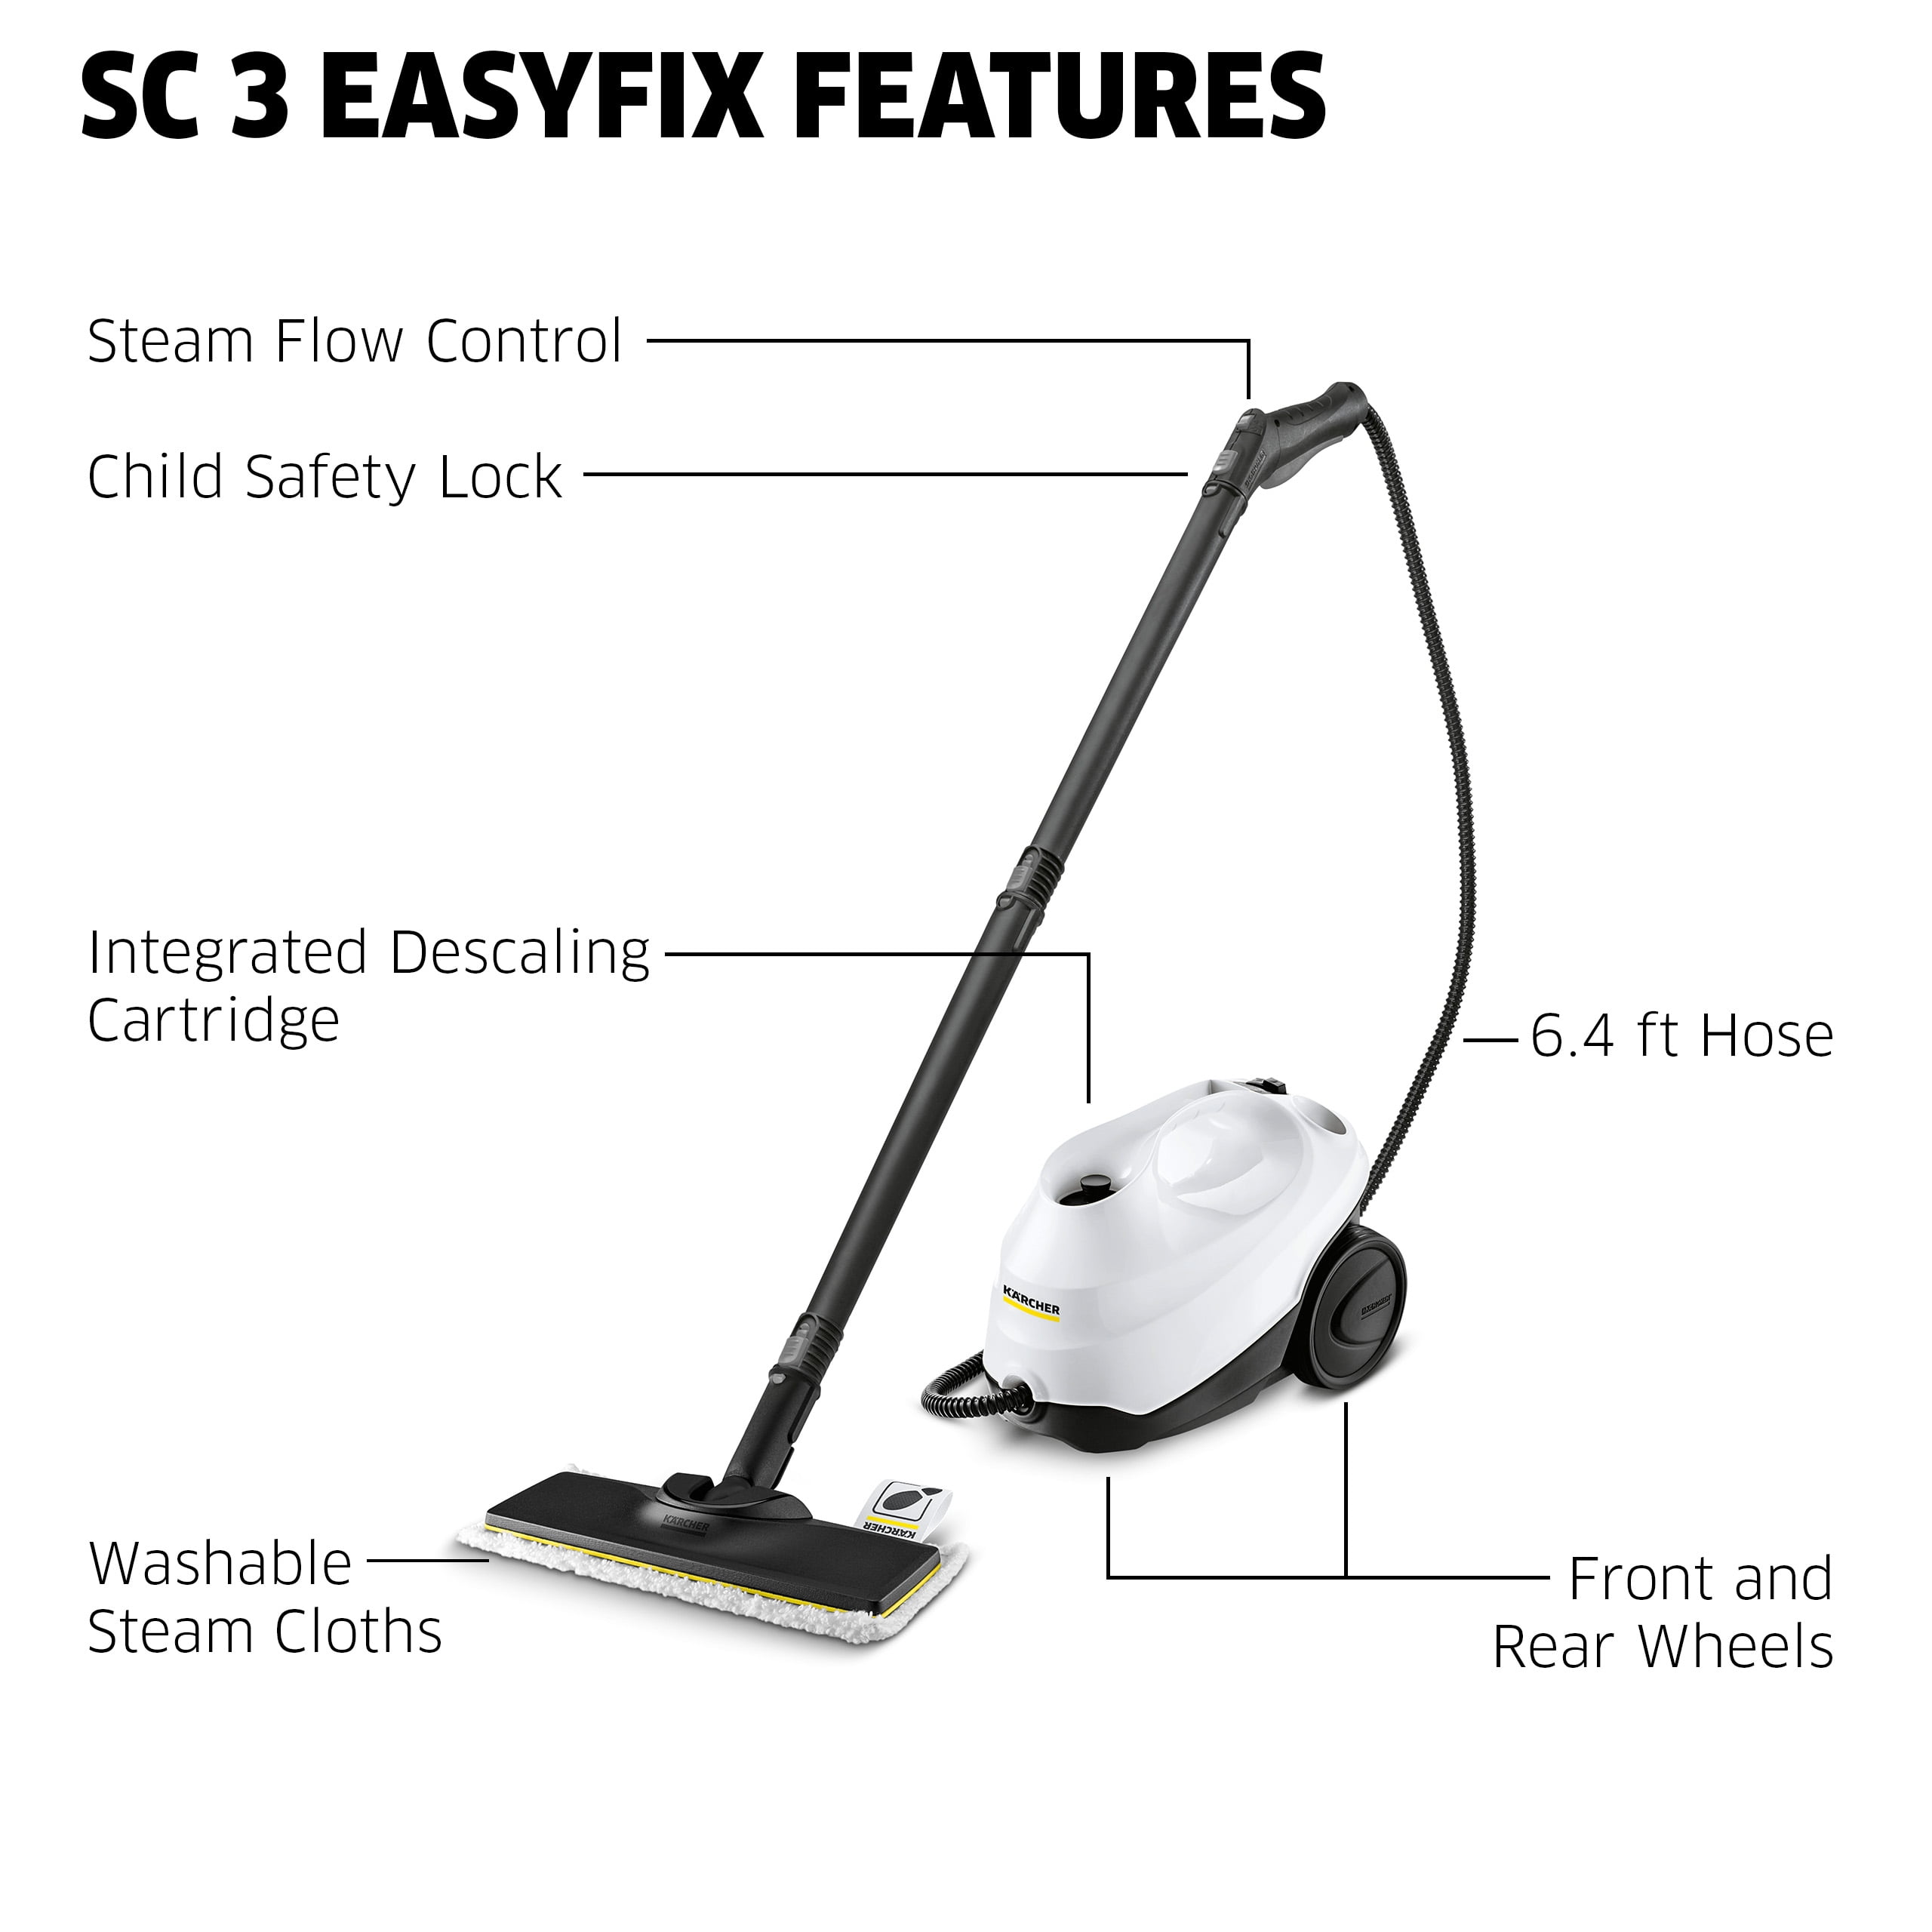 Effortless Steam Cleaning  Karcher SC3 EasyFix 